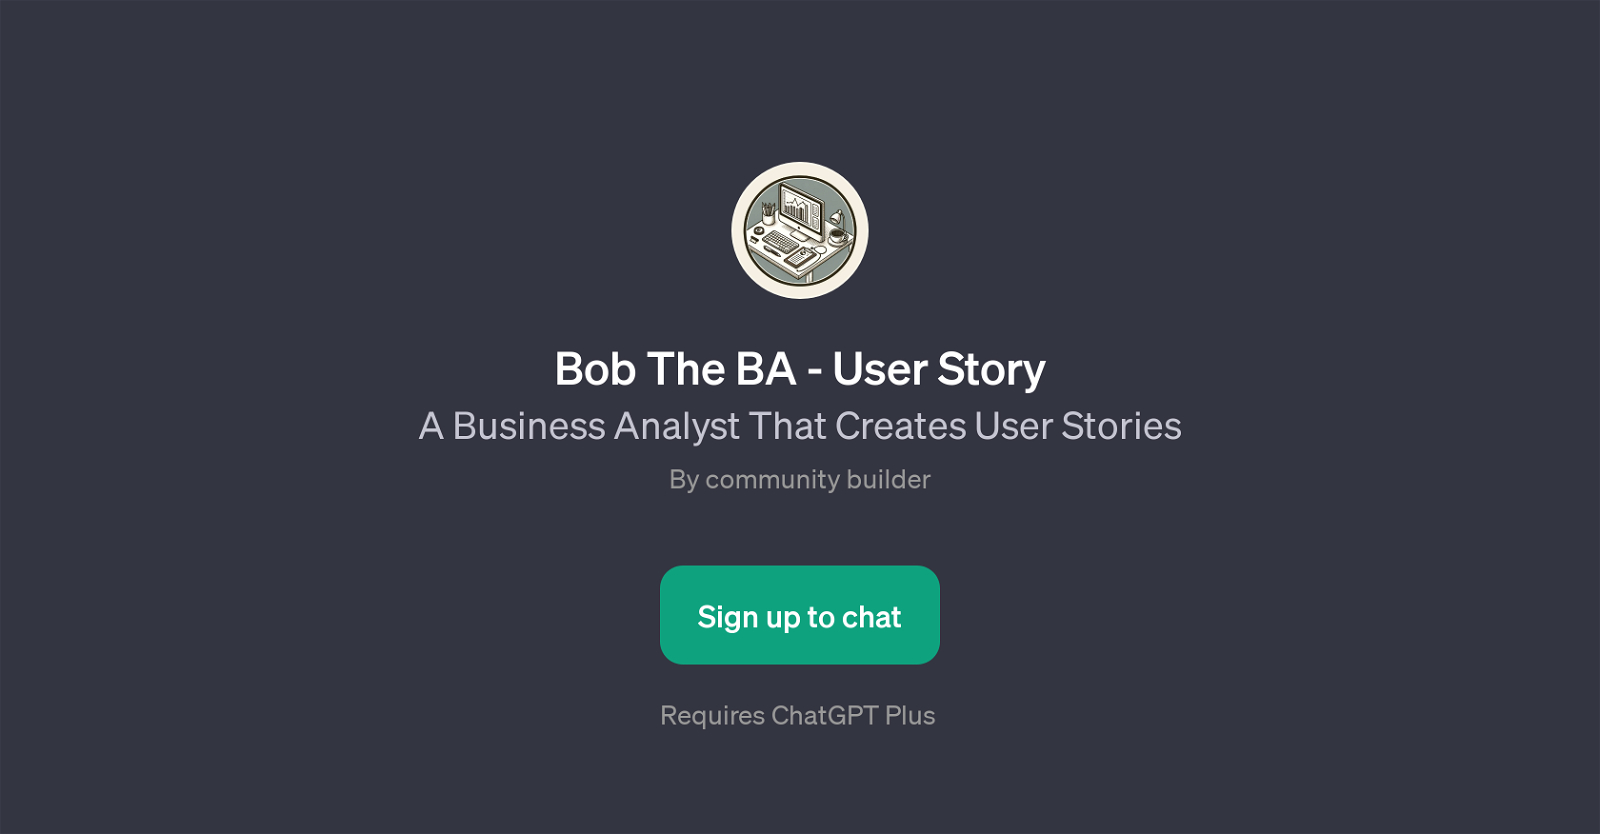 Bob The BA - User Story website